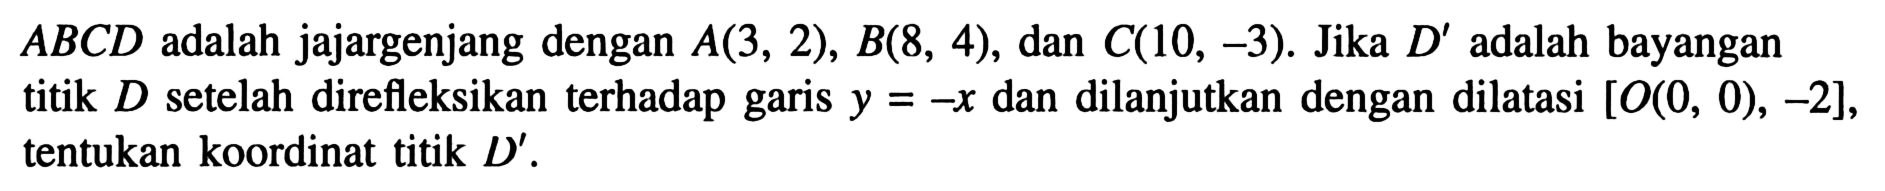 A B C D adalah jajargenjang dengan A(3,2), B(8,4), dan C(10,-3). Jika D' adalah bayangan titik D setelah direfleksikan terhadap garis y=-x dan dilanjutkan dengan dilatasi [O(0,0),-2], tentukan koordinat titik D'.